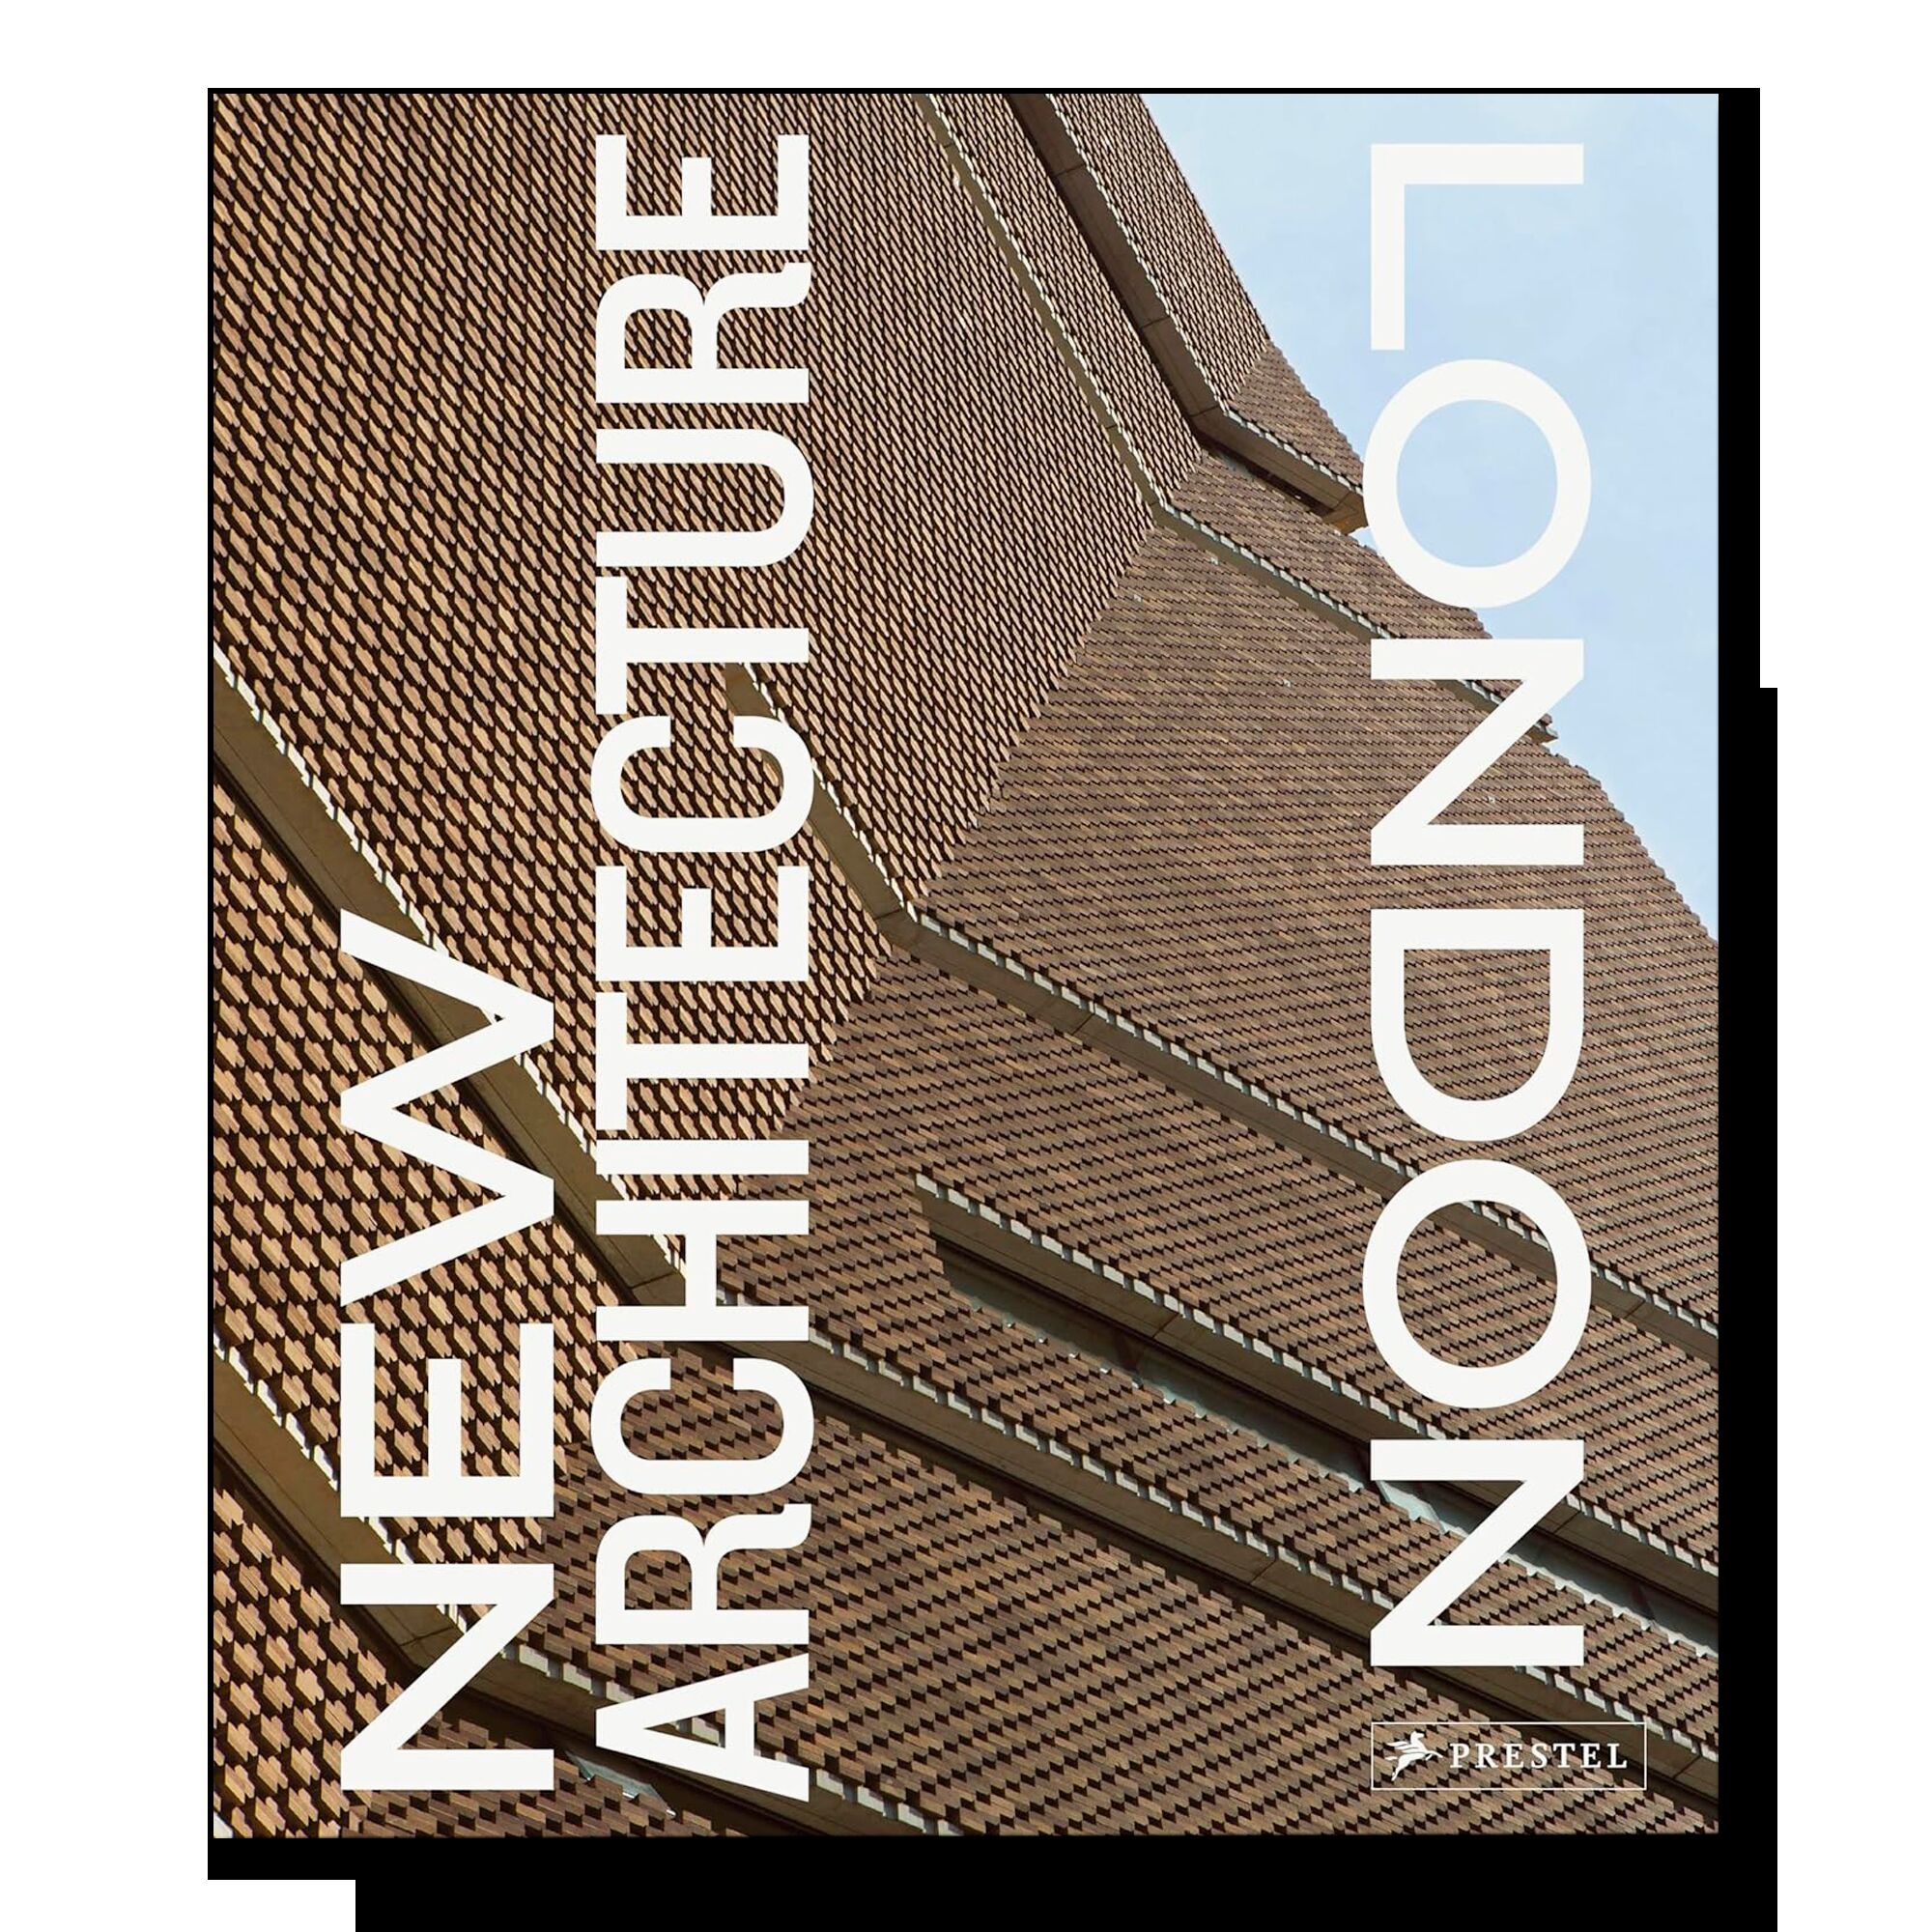 New Architecture London